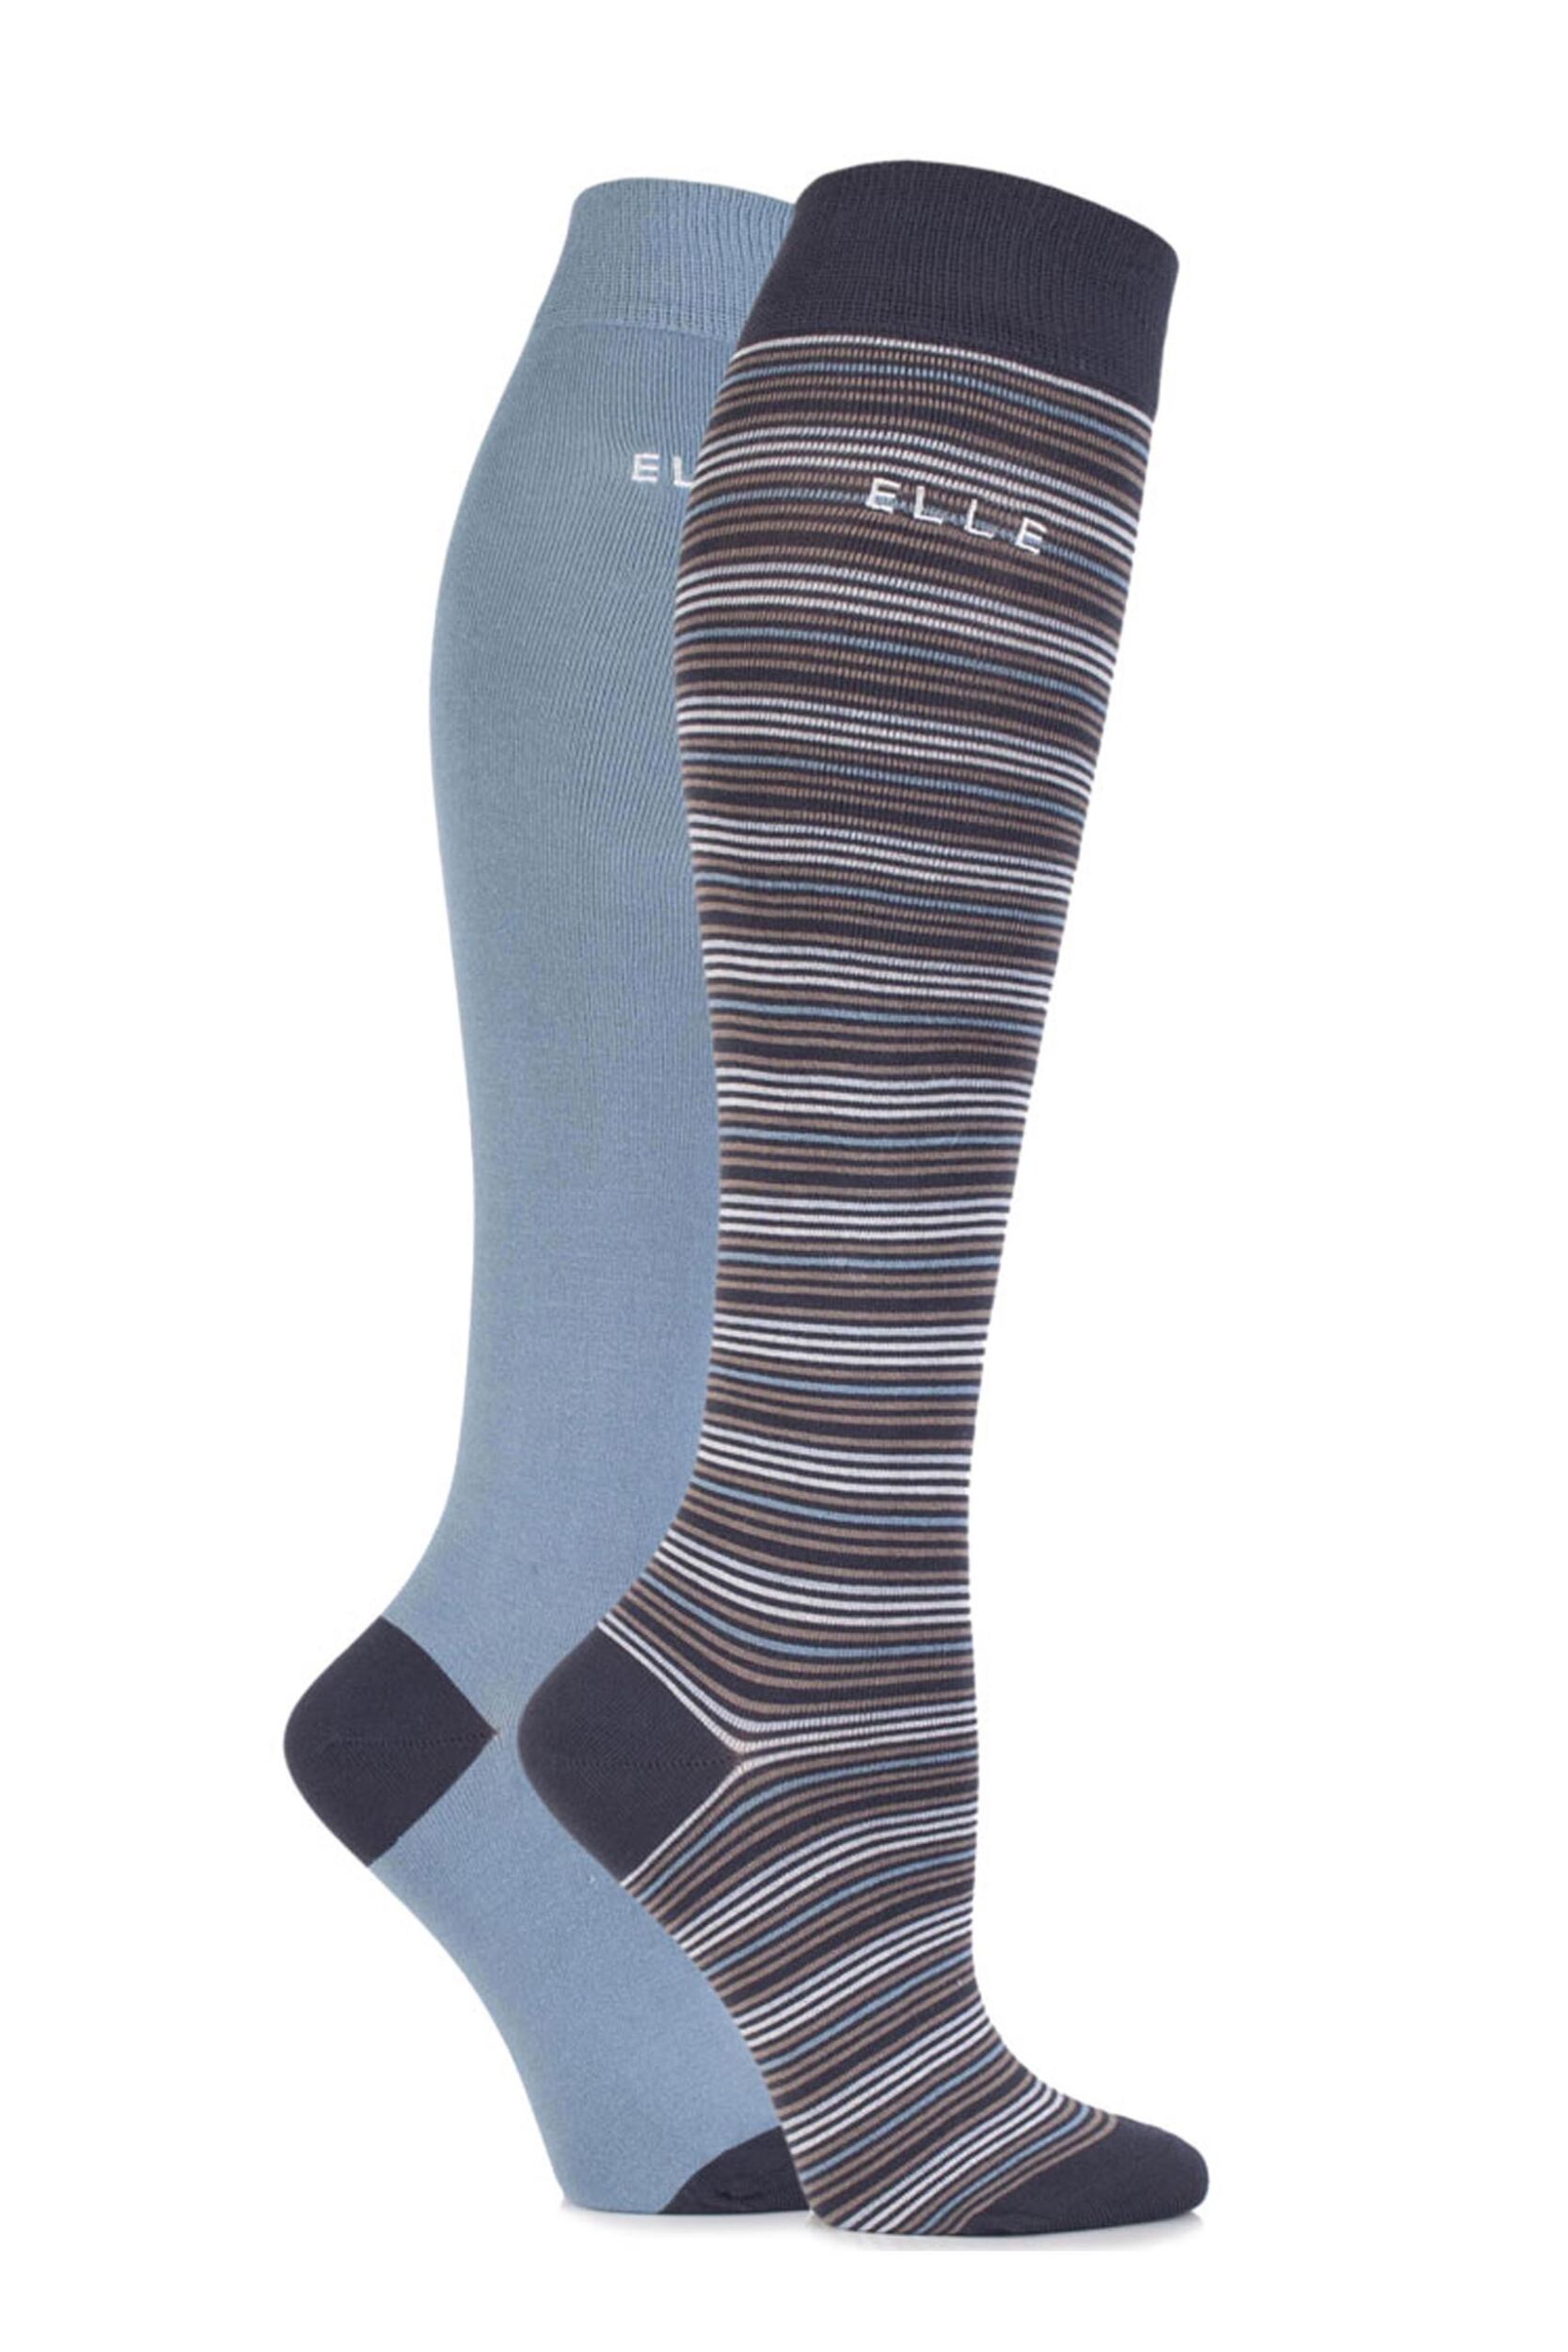 Ladies 2 Pair Elle Bamboo Striped and Plain Knee High Socks | eBay